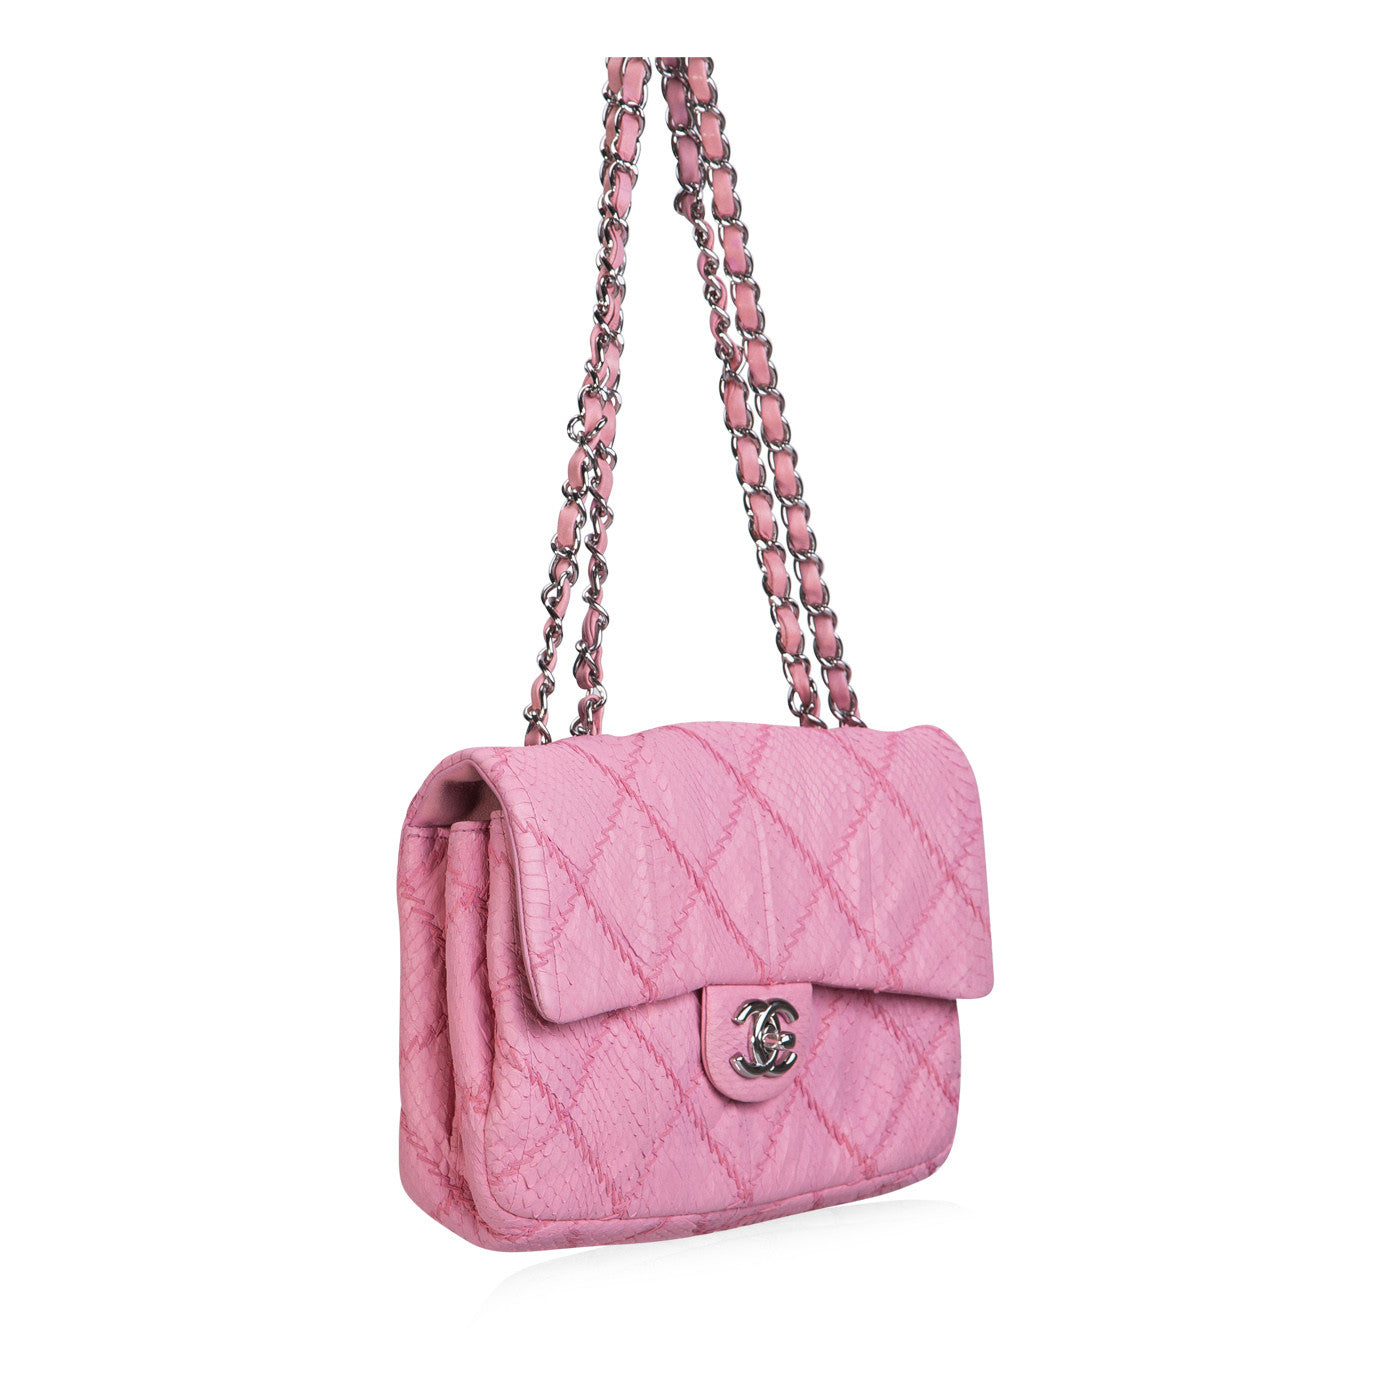 Chanel - Classic Python Flap Bag